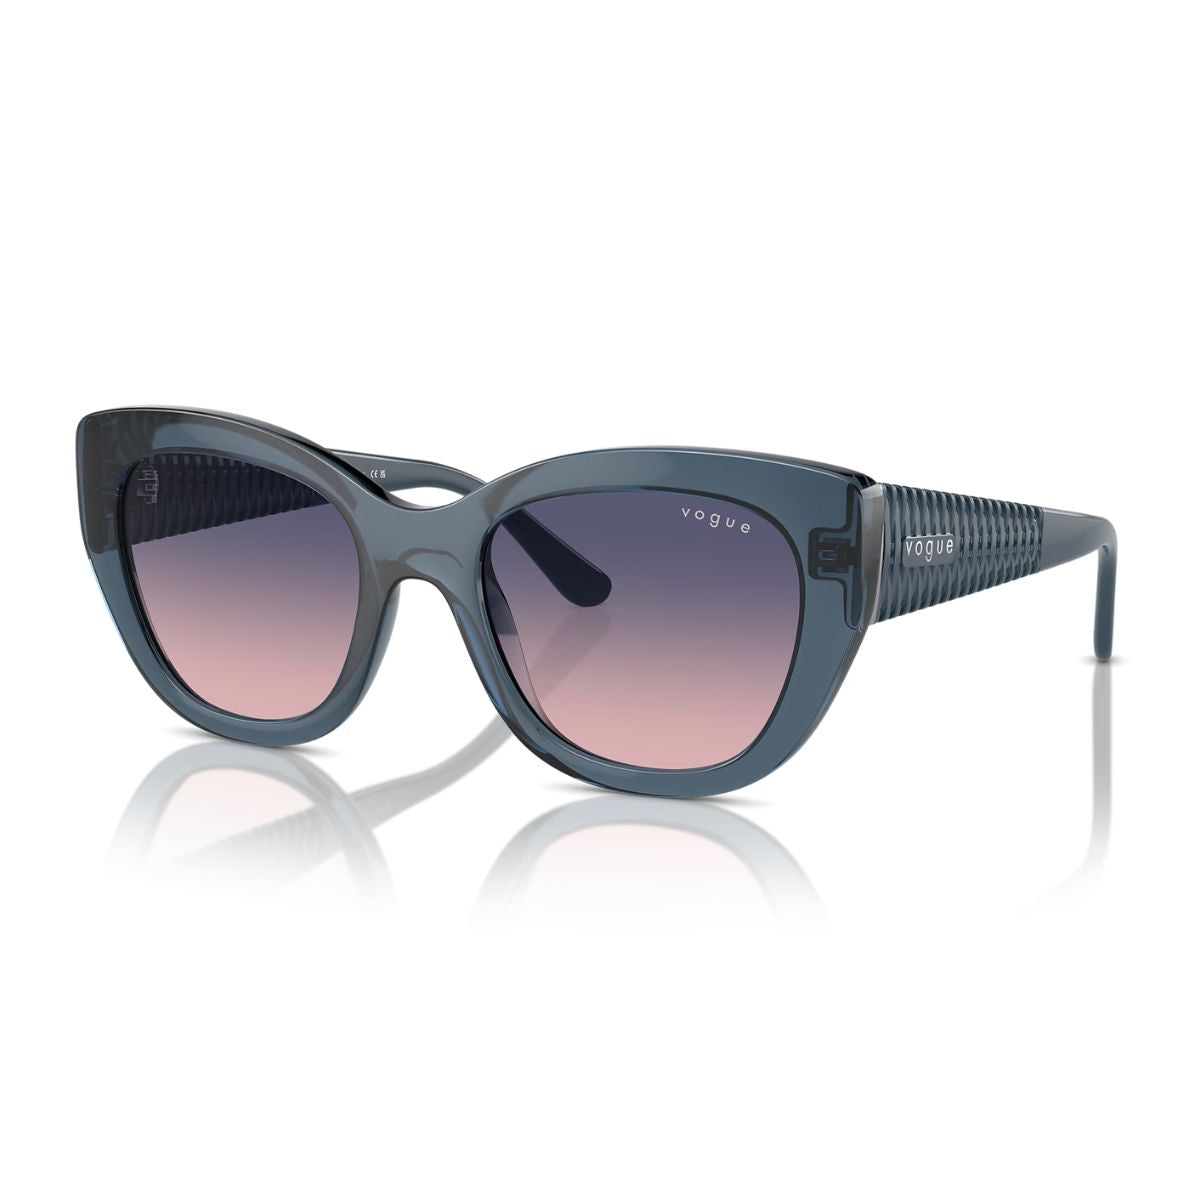 "Buy Trending Vogue UV Protection Sunglasses For Women's At Online | Optorium"